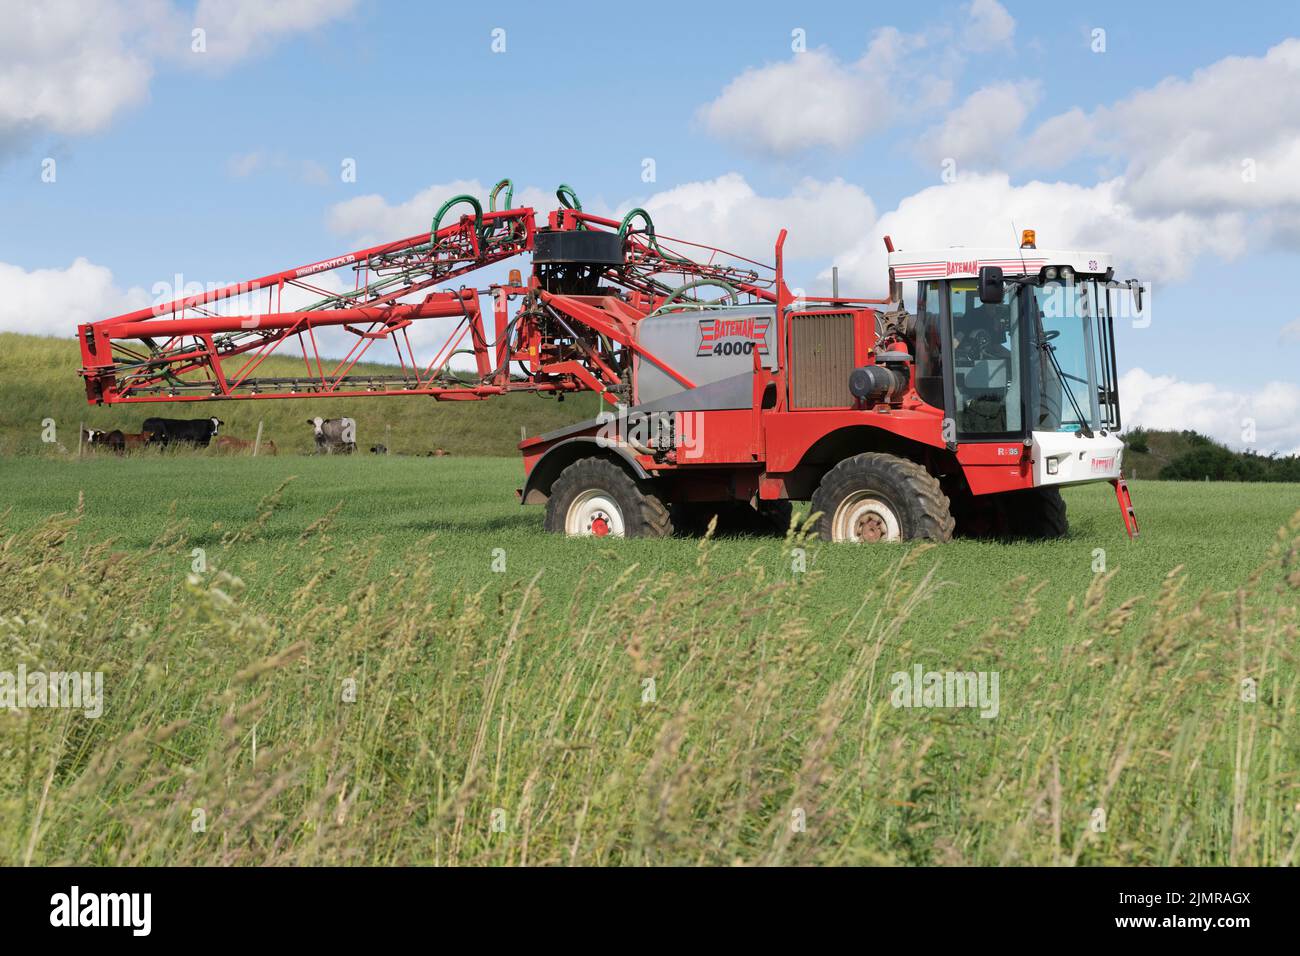 A Bateman 4000 Crop Sprayer in a Field of Unripe Barley Retracting Its Spray Boom After Spraying the Crop Stock Photo